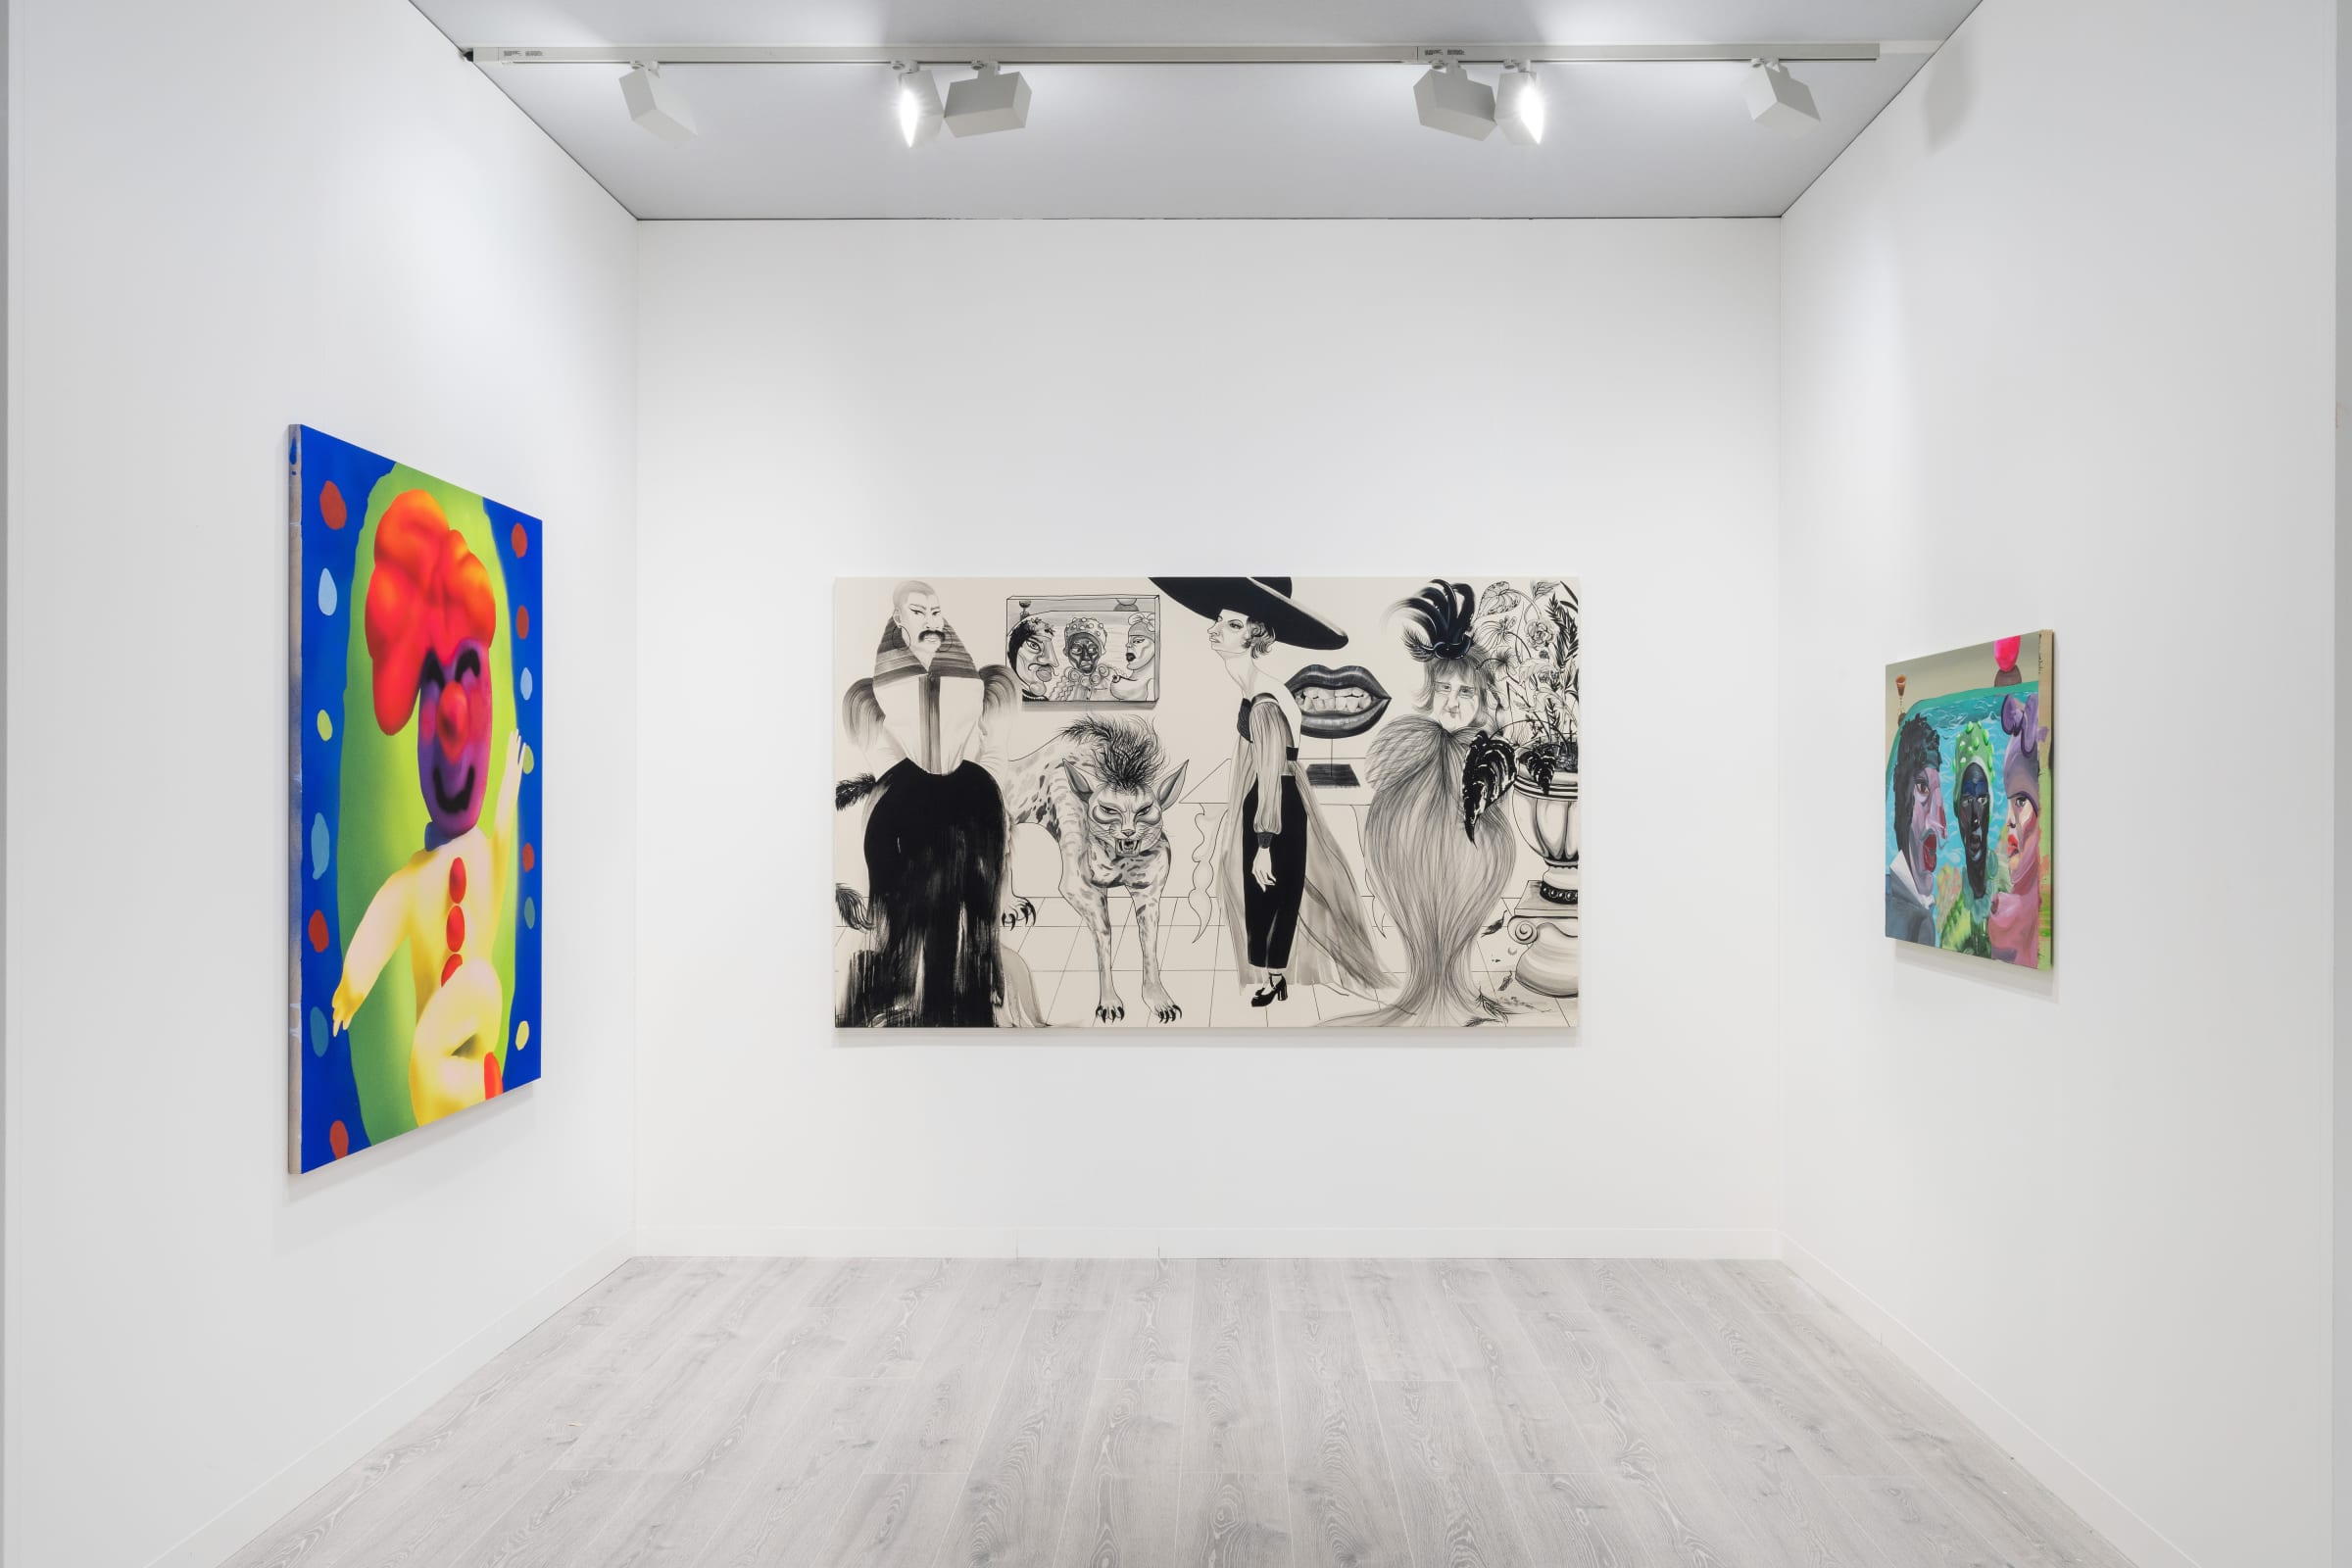 Art Basel Miami Beach – The Society of the Four Arts